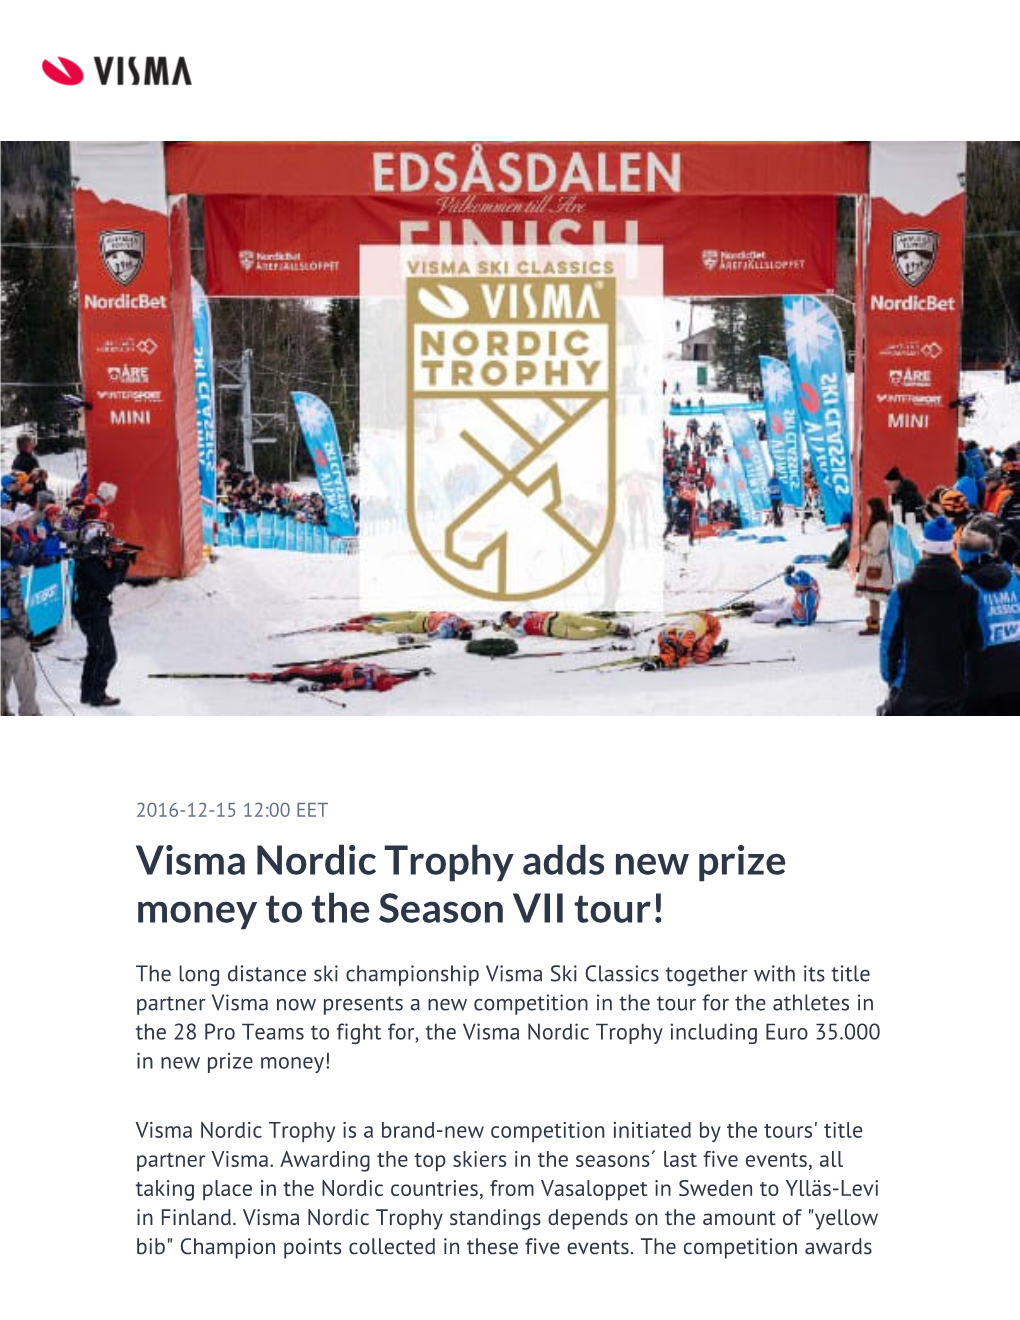 ​Visma Nordic Trophy Adds New Prize Money to the Season VII Tour!